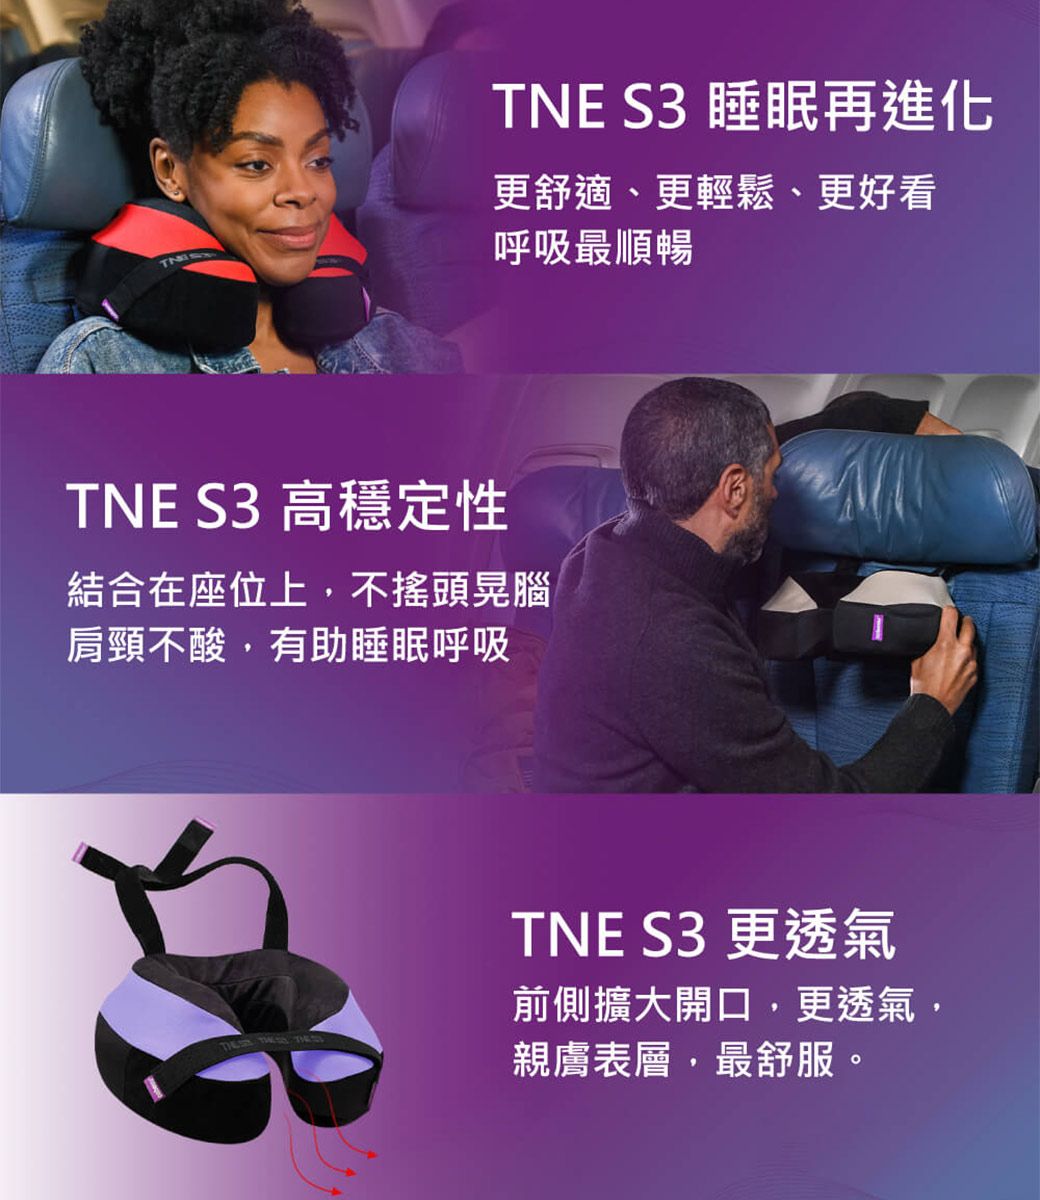 TNE S3 睡眠再進化更舒適、更輕鬆、更好看呼吸最順暢TNE S3 高穩定性結合在座位上,不搖頭晃腦肩頸不酸,有助睡眠呼吸TNE S3 更透氣前側擴大開口,更透氣,親膚表層,最舒服。